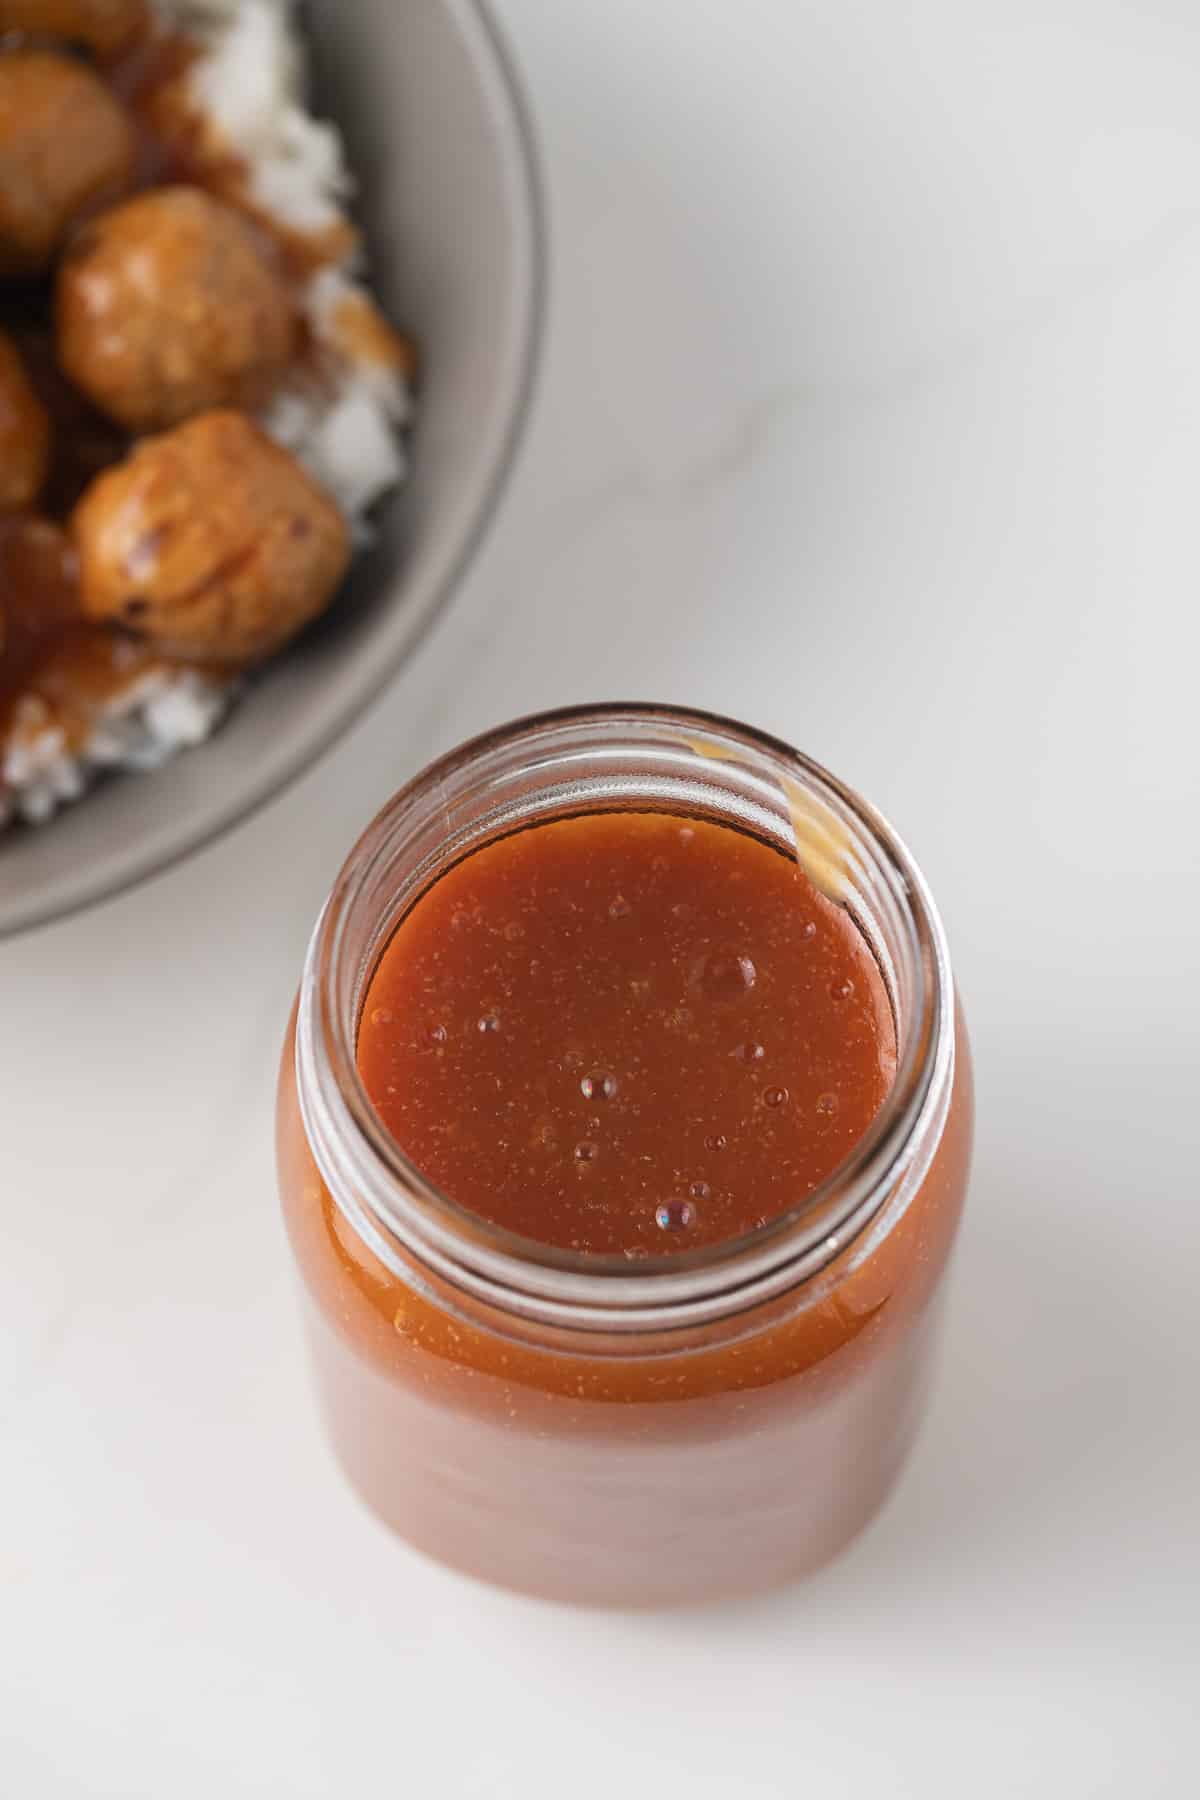 Pineapple orange sauce in a glass jar.